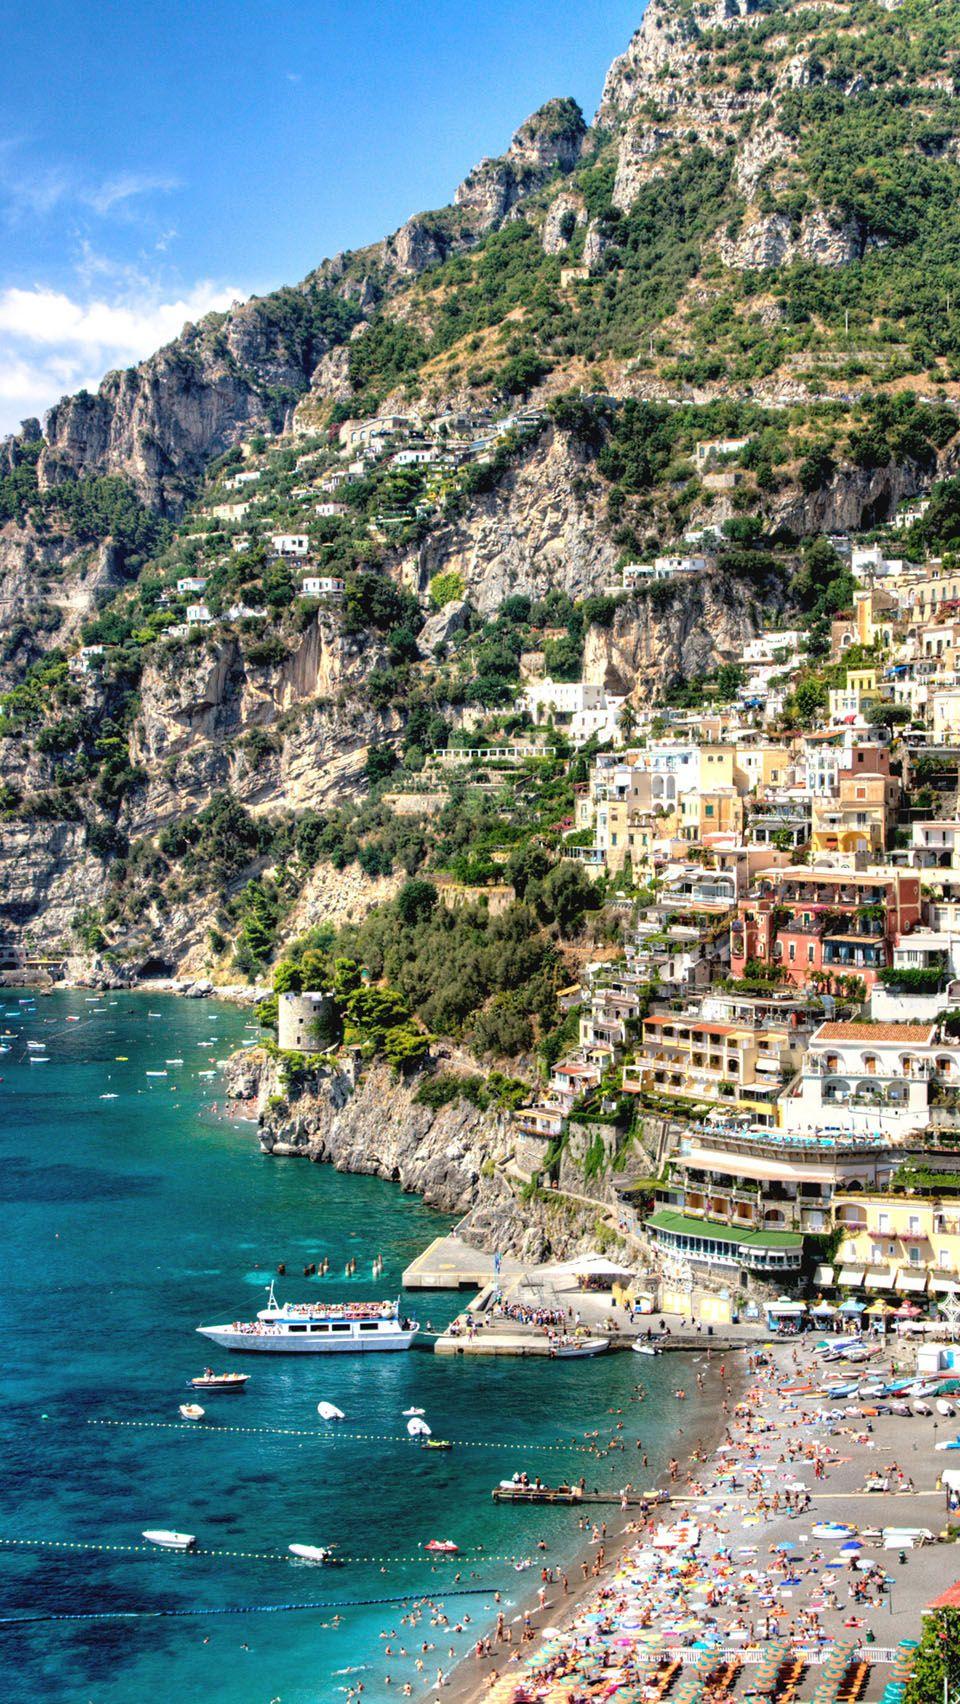 Positano village- Amalfy coast. Italy. Summer vacation